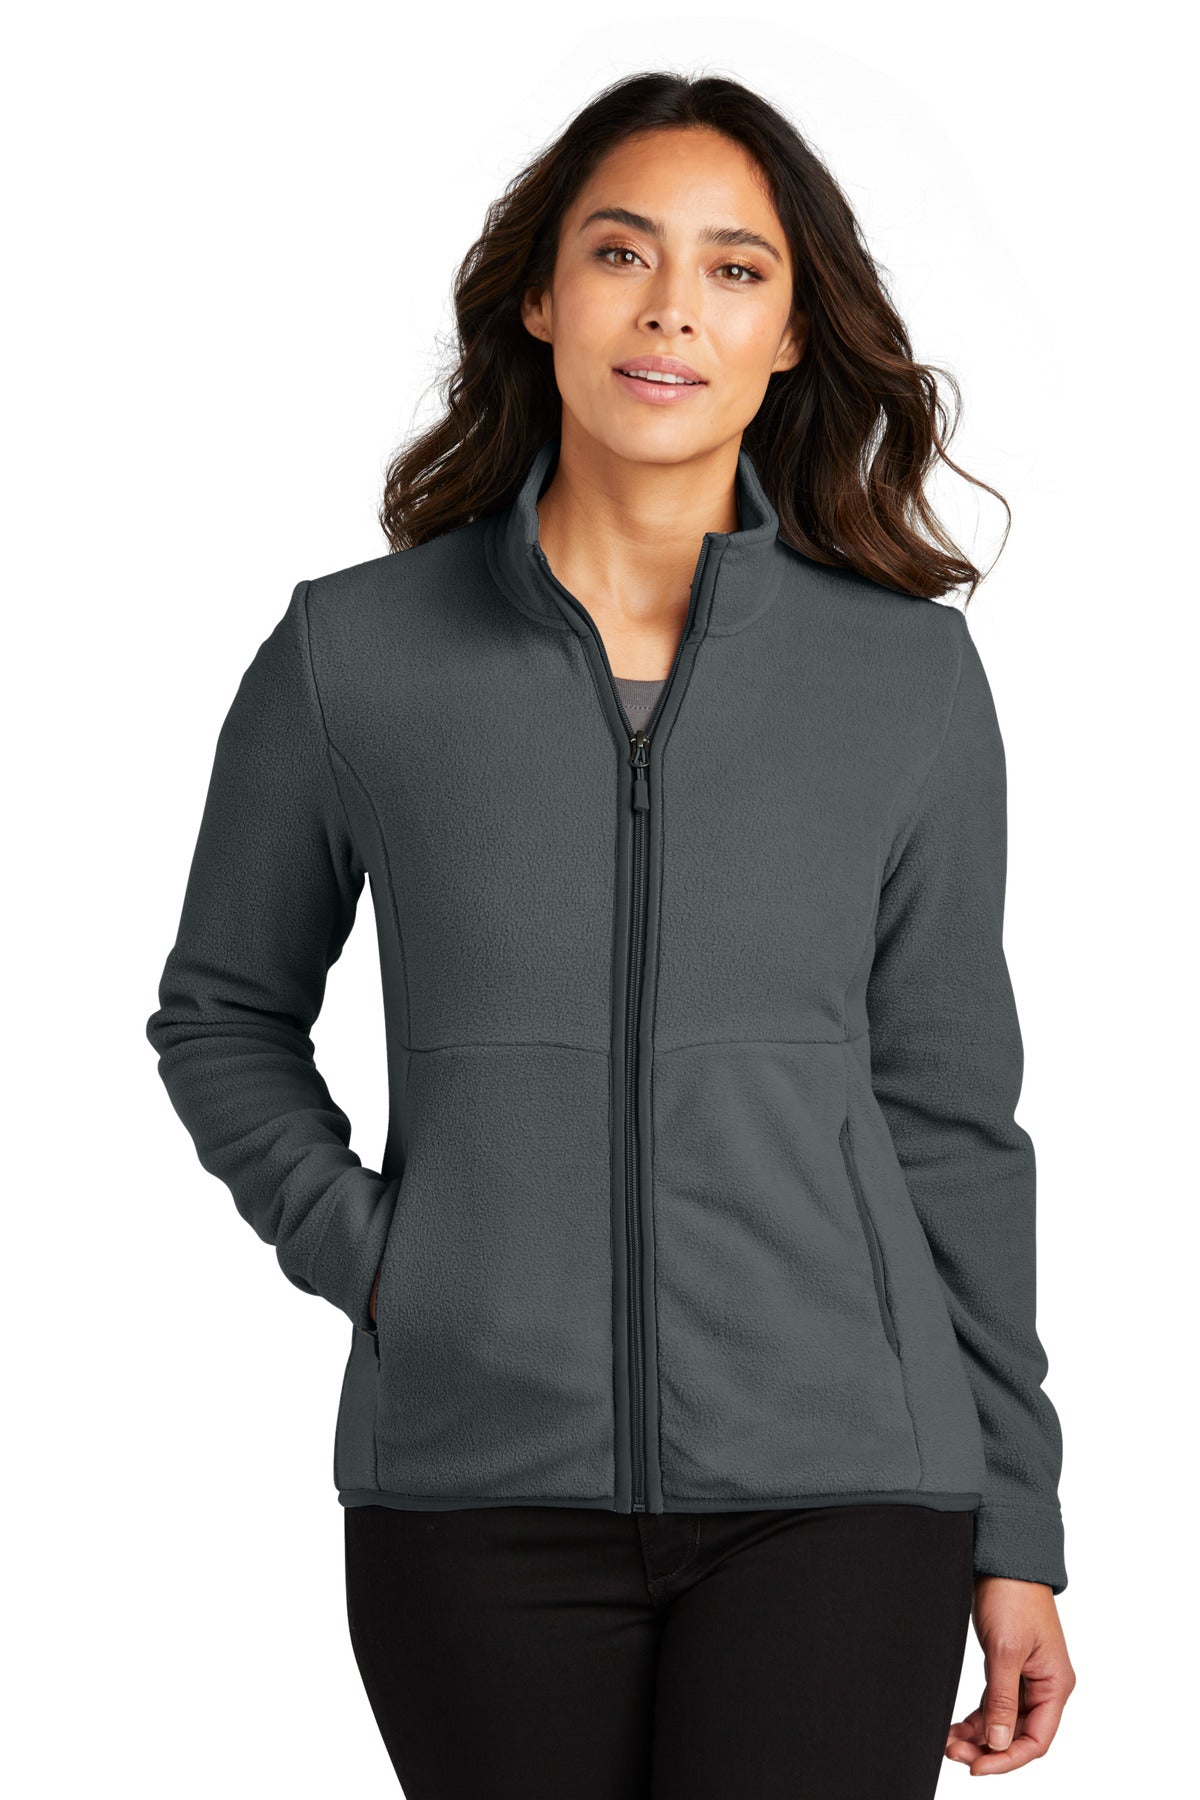 NAWBOPort Authority® Ladies Connection Fleece Jacket L110